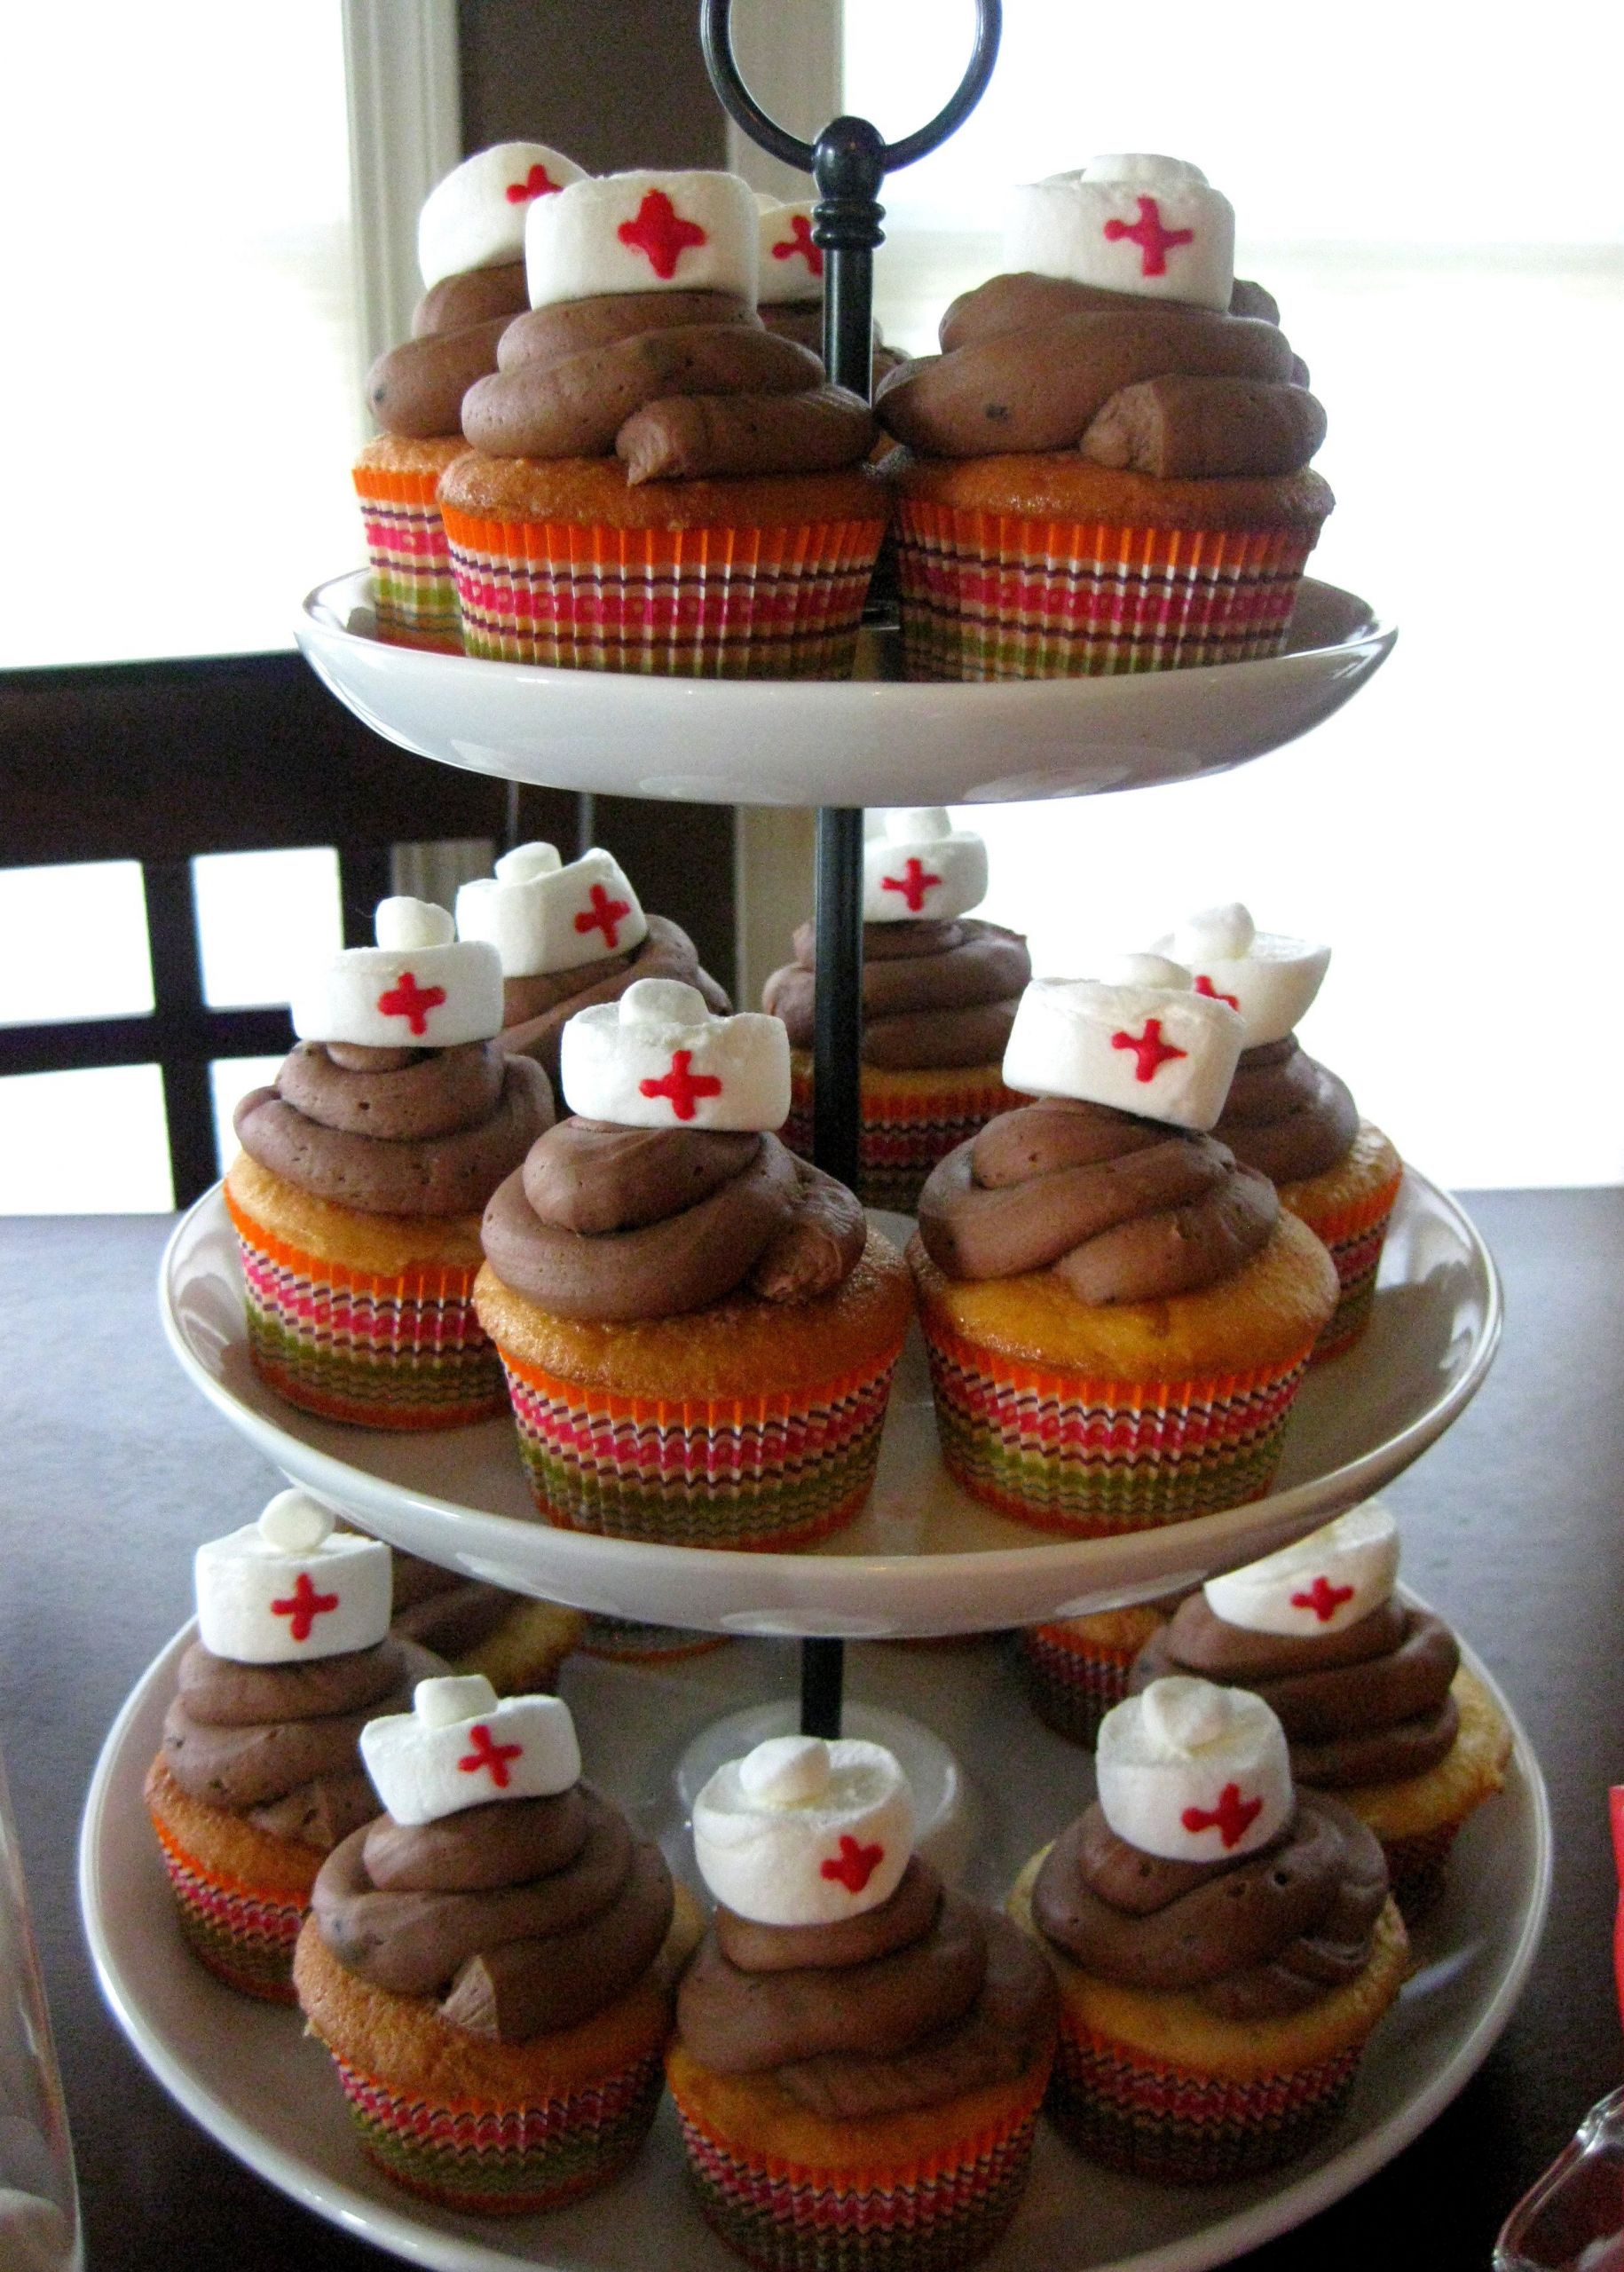 Graduation Party Cupcake Ideas
 nurse hat cupcakes from my nursing school graduation party